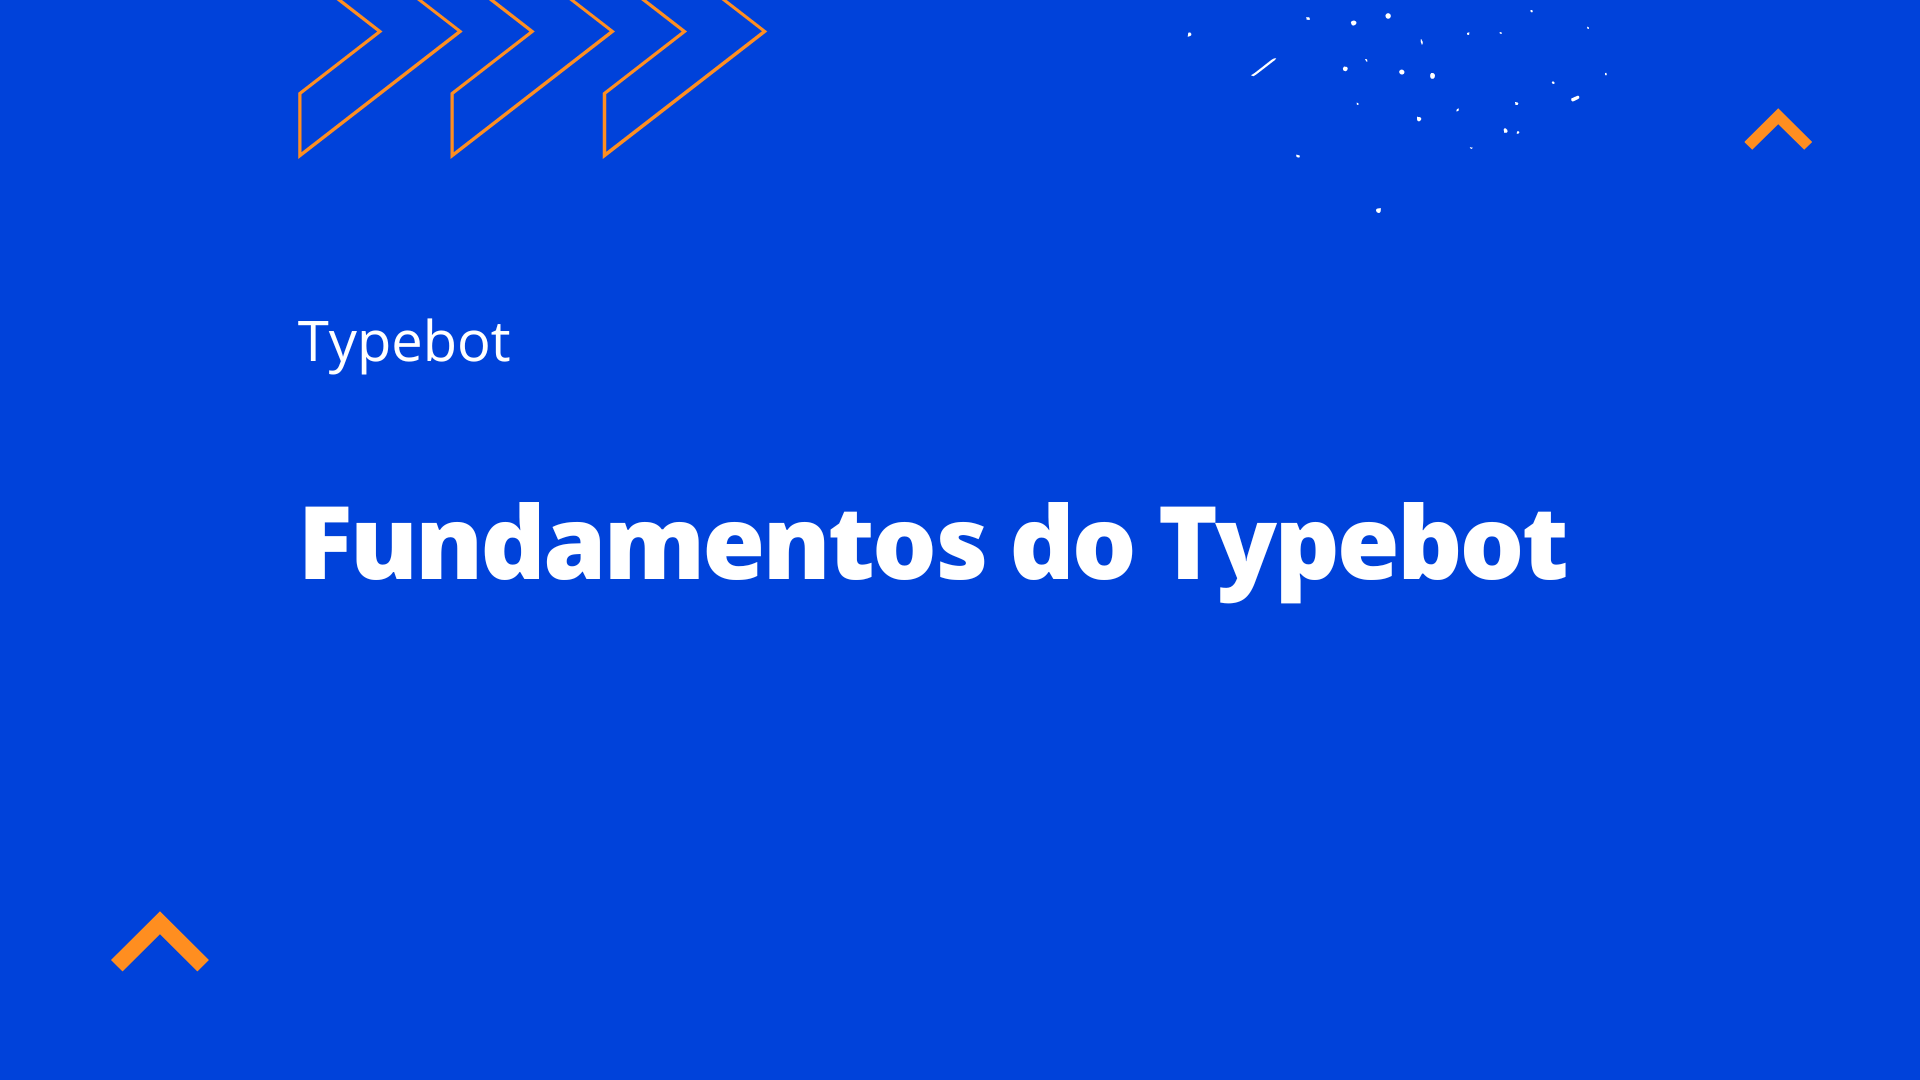 Fundamentos do Typebot